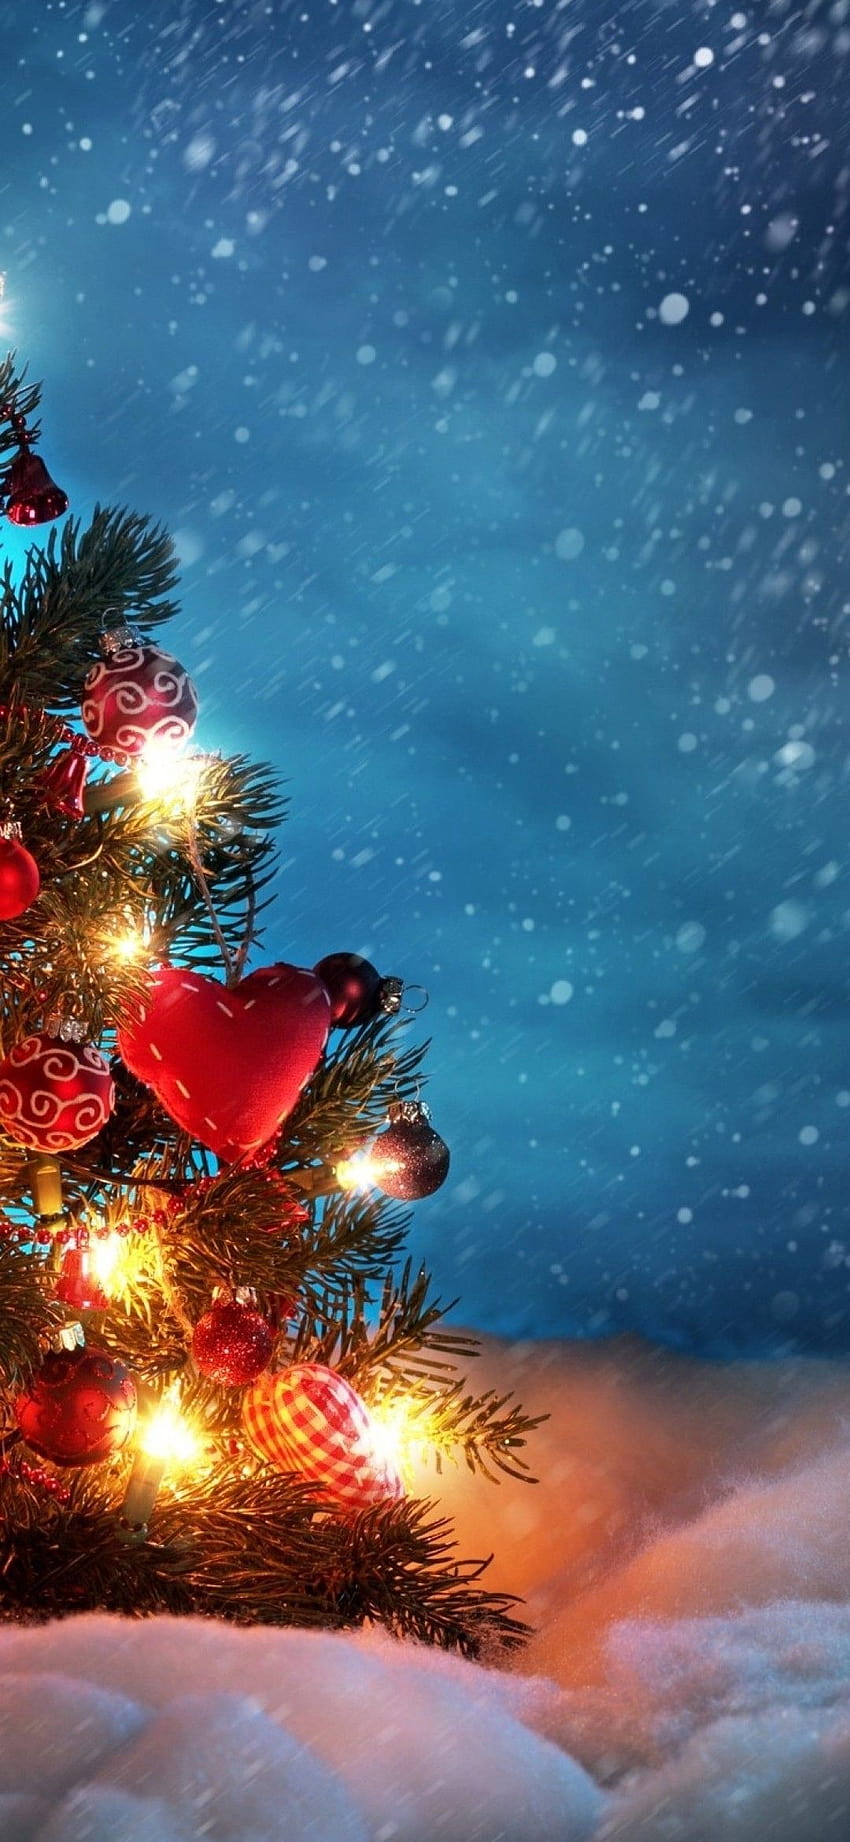 1080x2340 Christmas Tree, Lights, Snow, Winter for Xiaomi Mi 9 & Mi Mix 3 & Black Shark 2, Vivo V15 Pro, OnePlus 6T, Huawei Y9 2019, winter 1080x2340 HD phone wallpaper